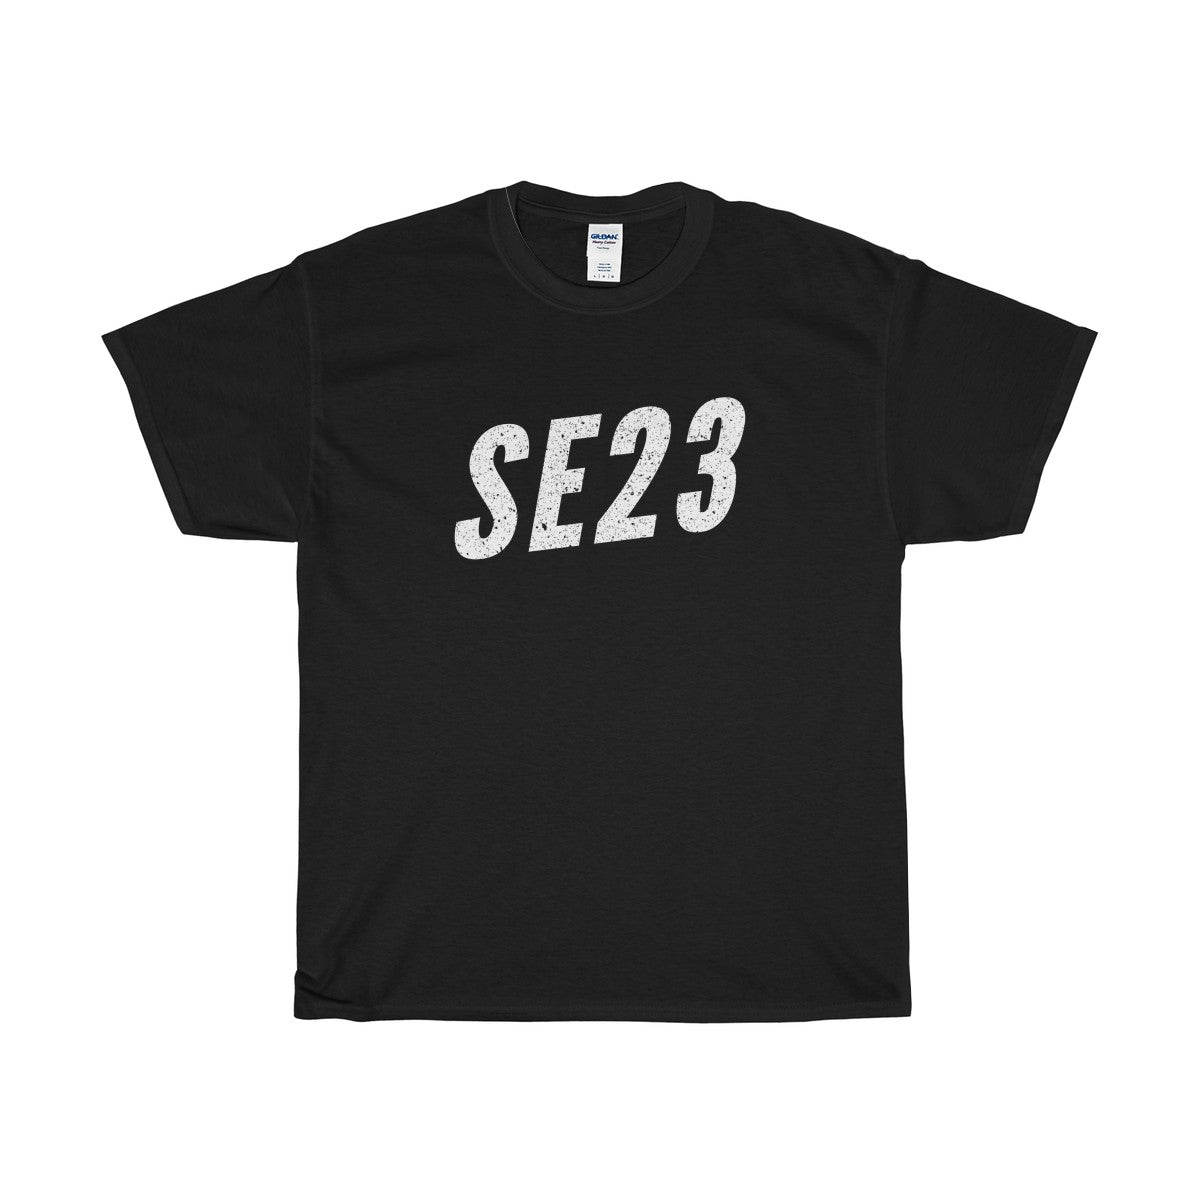 Forest Hill SE23 T-Shirt